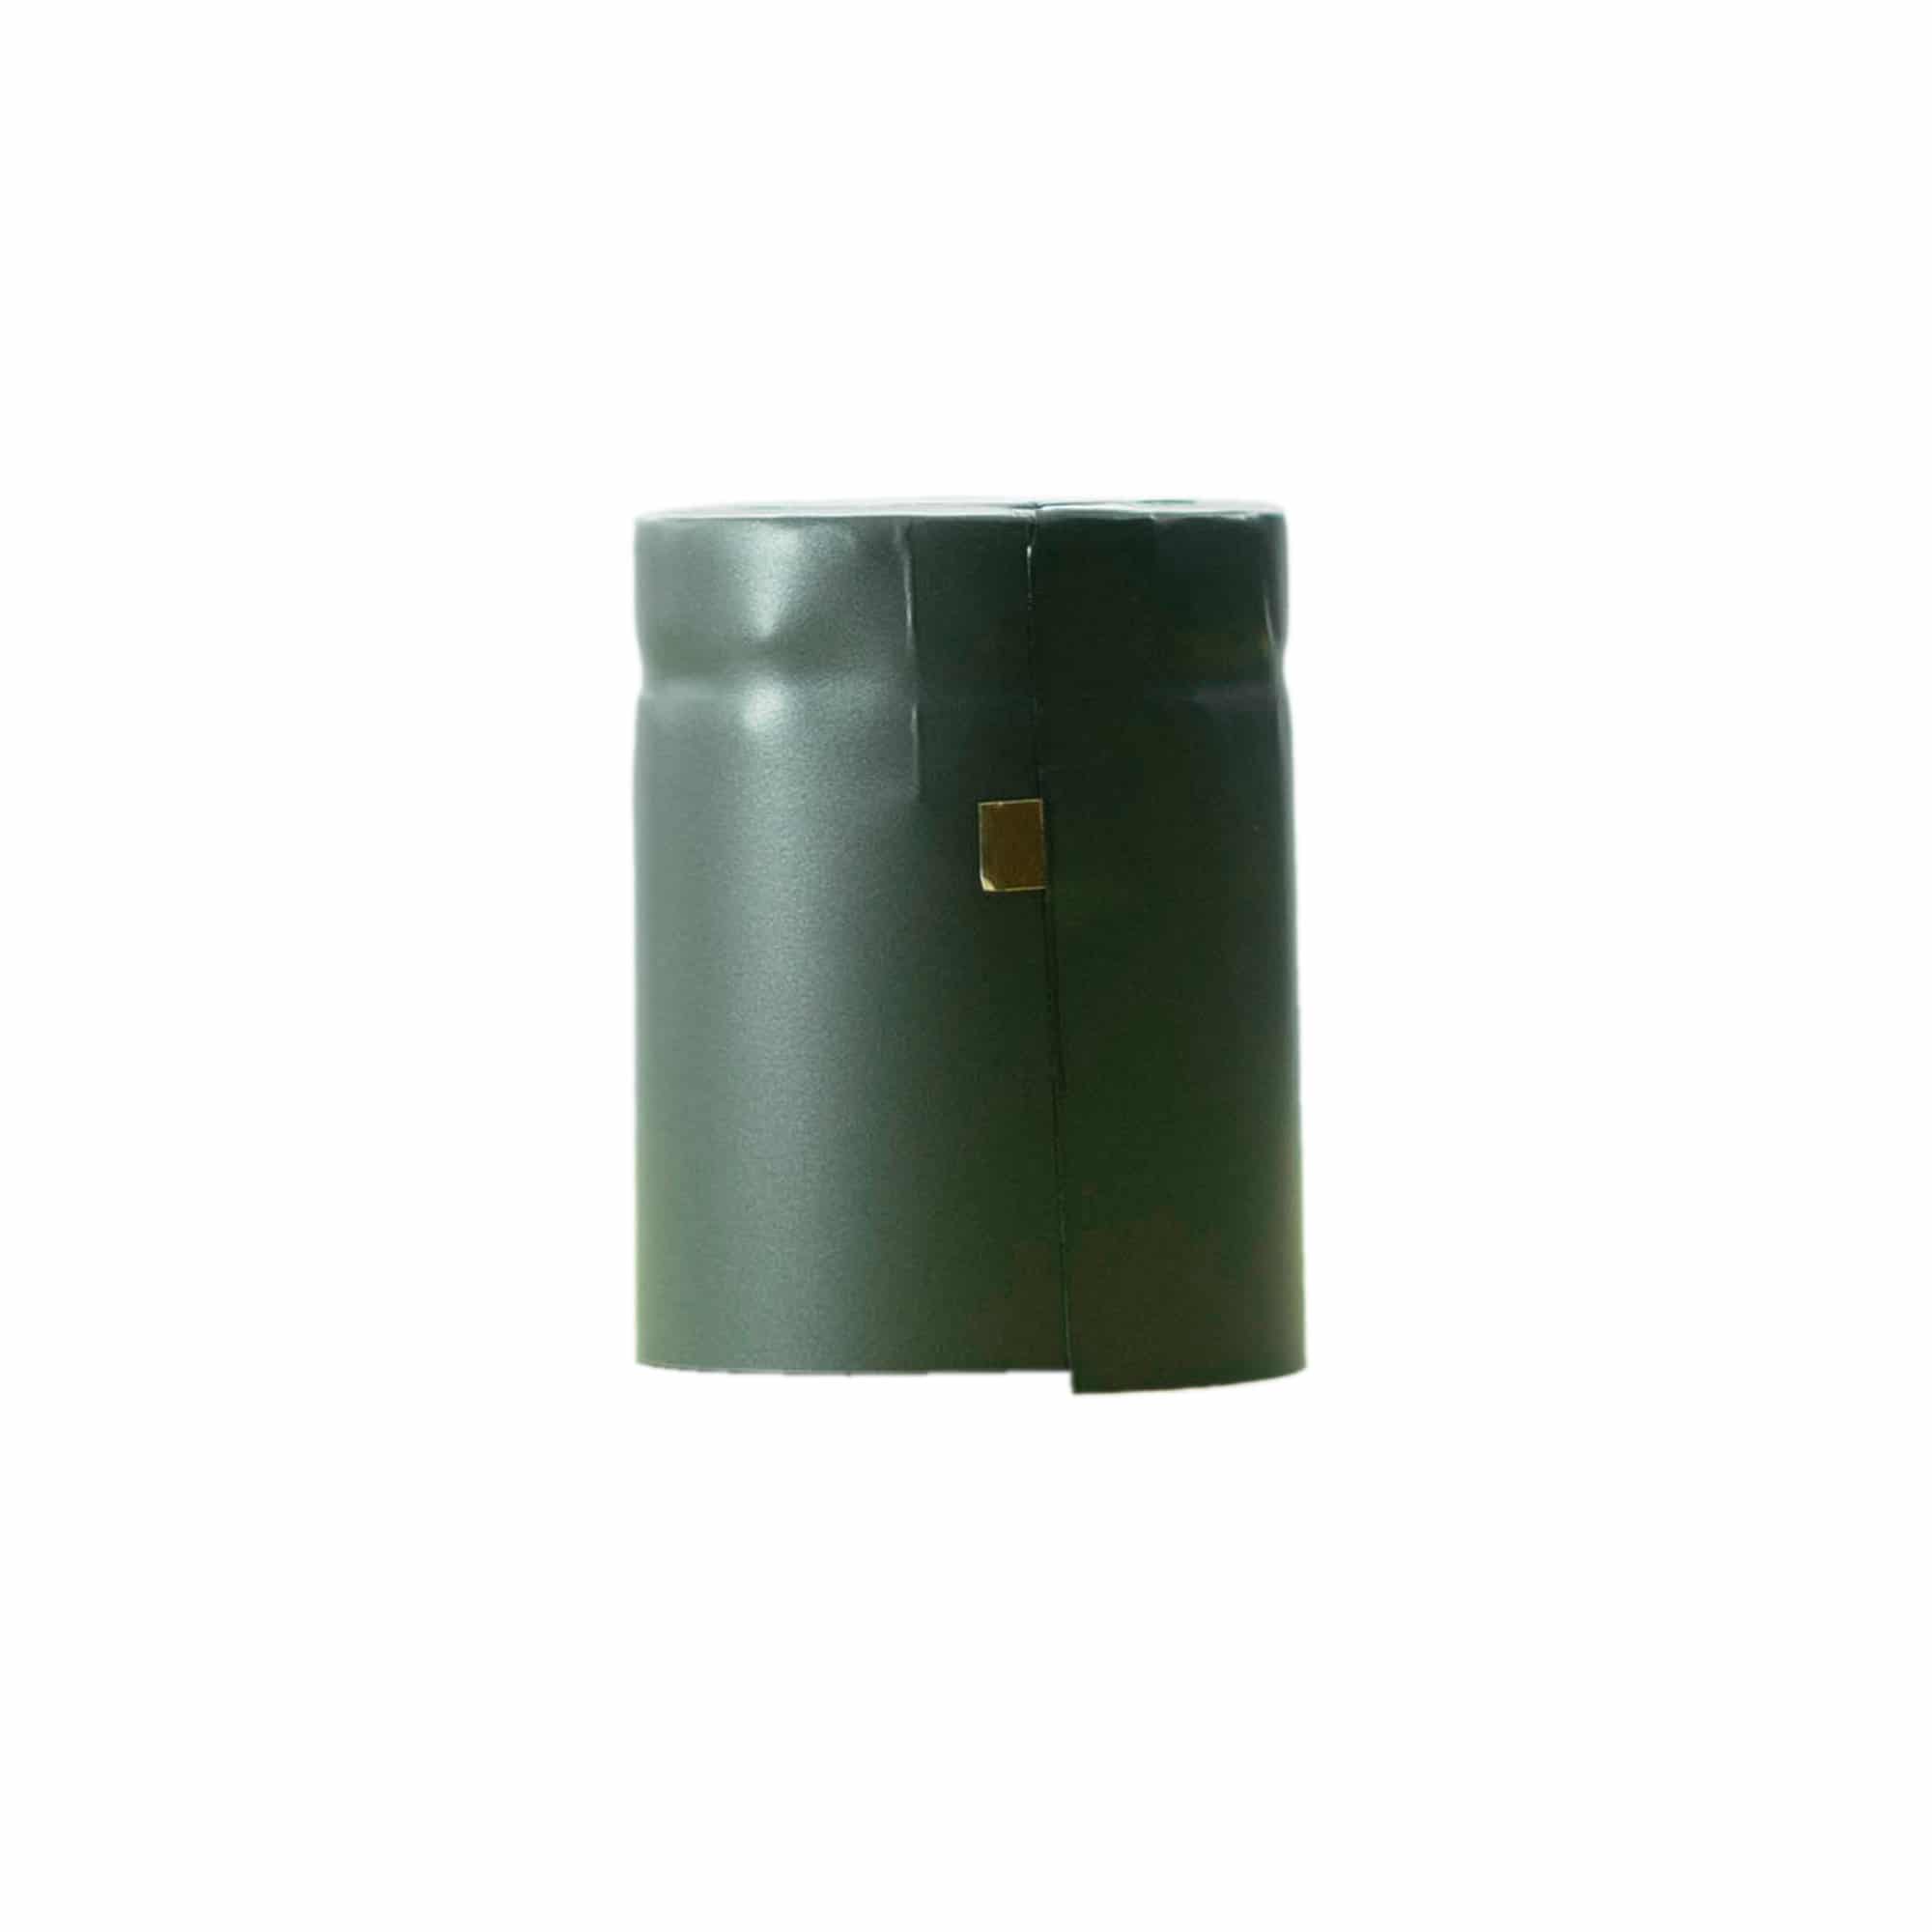 Krimpcapsule 32x41, pvc-kunststof, antraciet